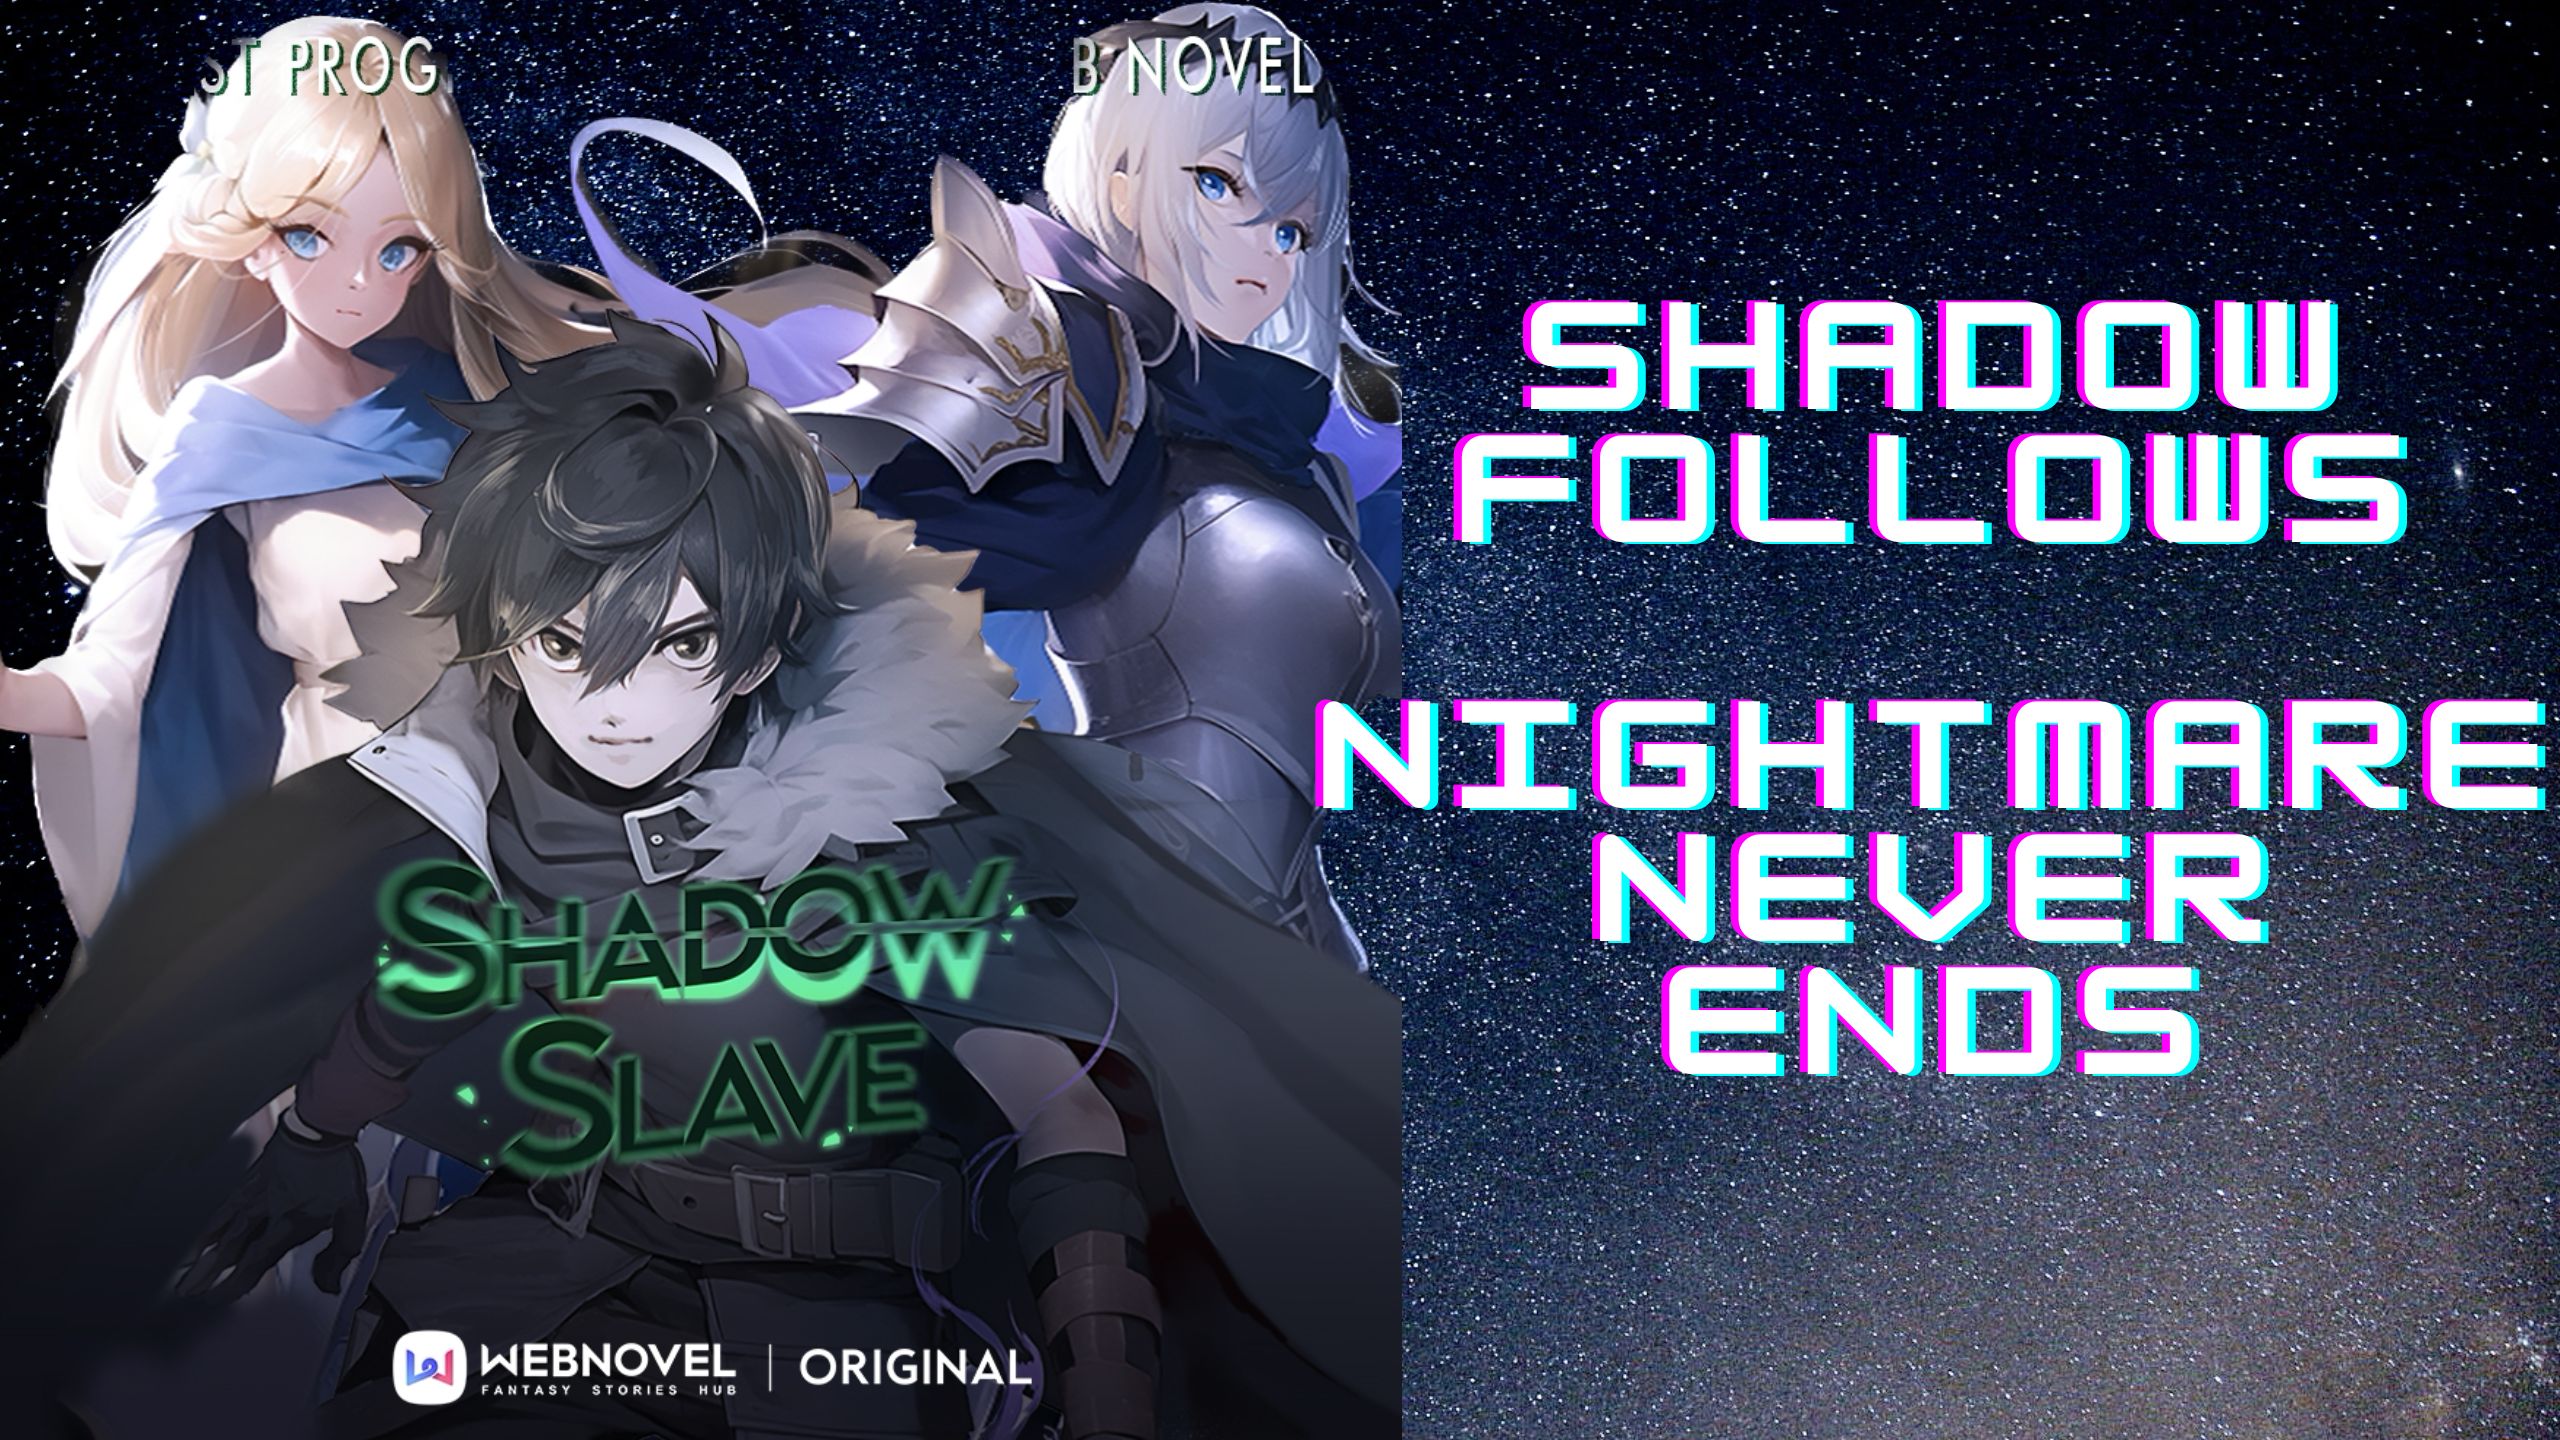 Shadow Slave – Webnovel’s TOP Progression Fantasy Novel